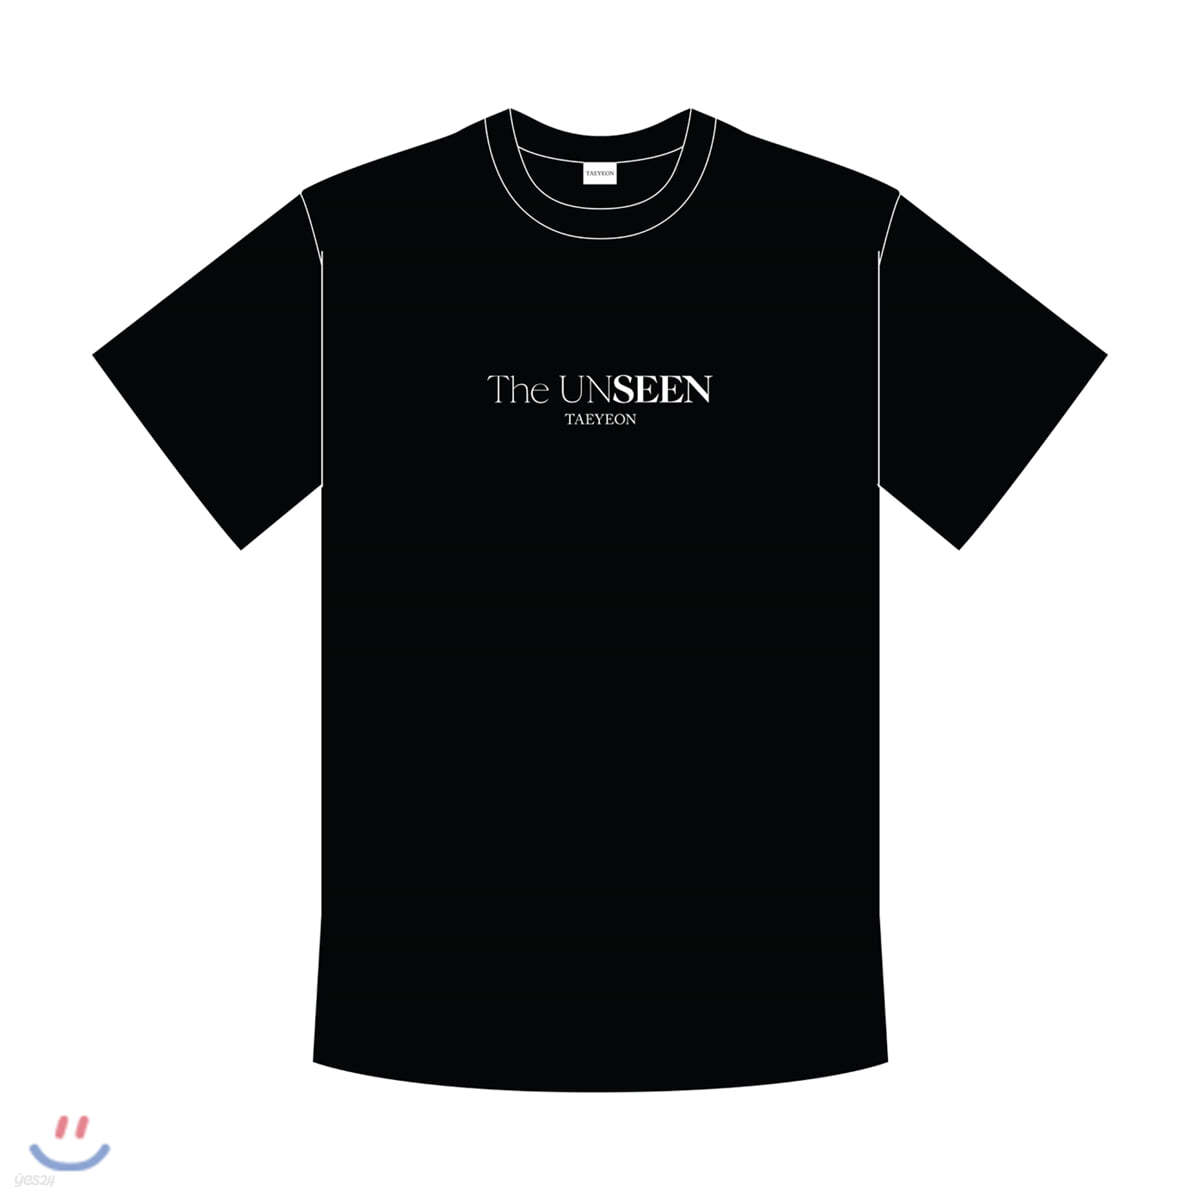 TAEYEON Concert - The UNSEEN 티셔츠